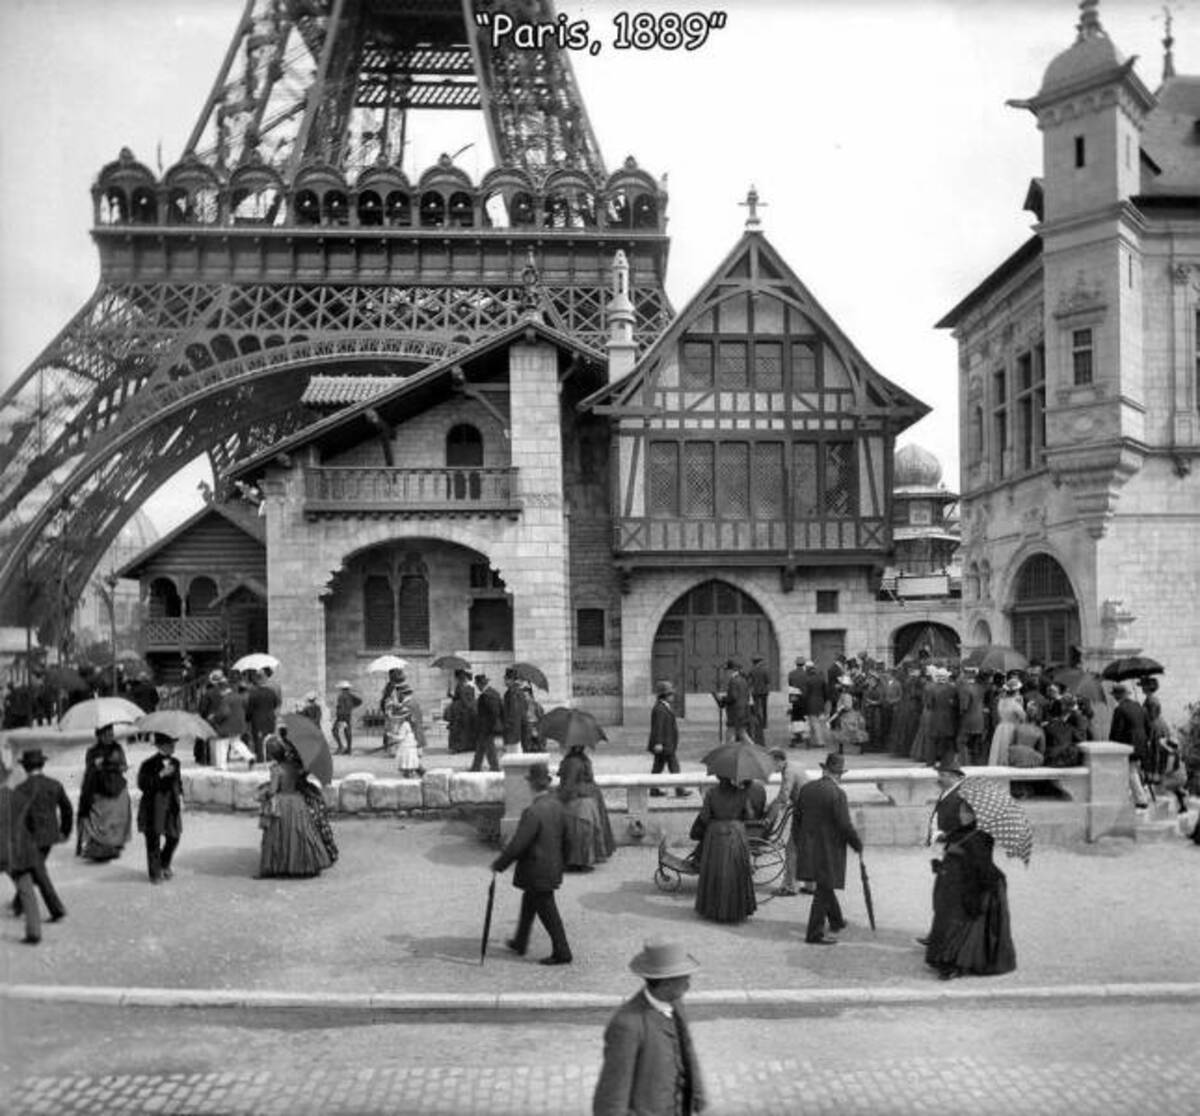 old photos paris - "Paris, 1889"